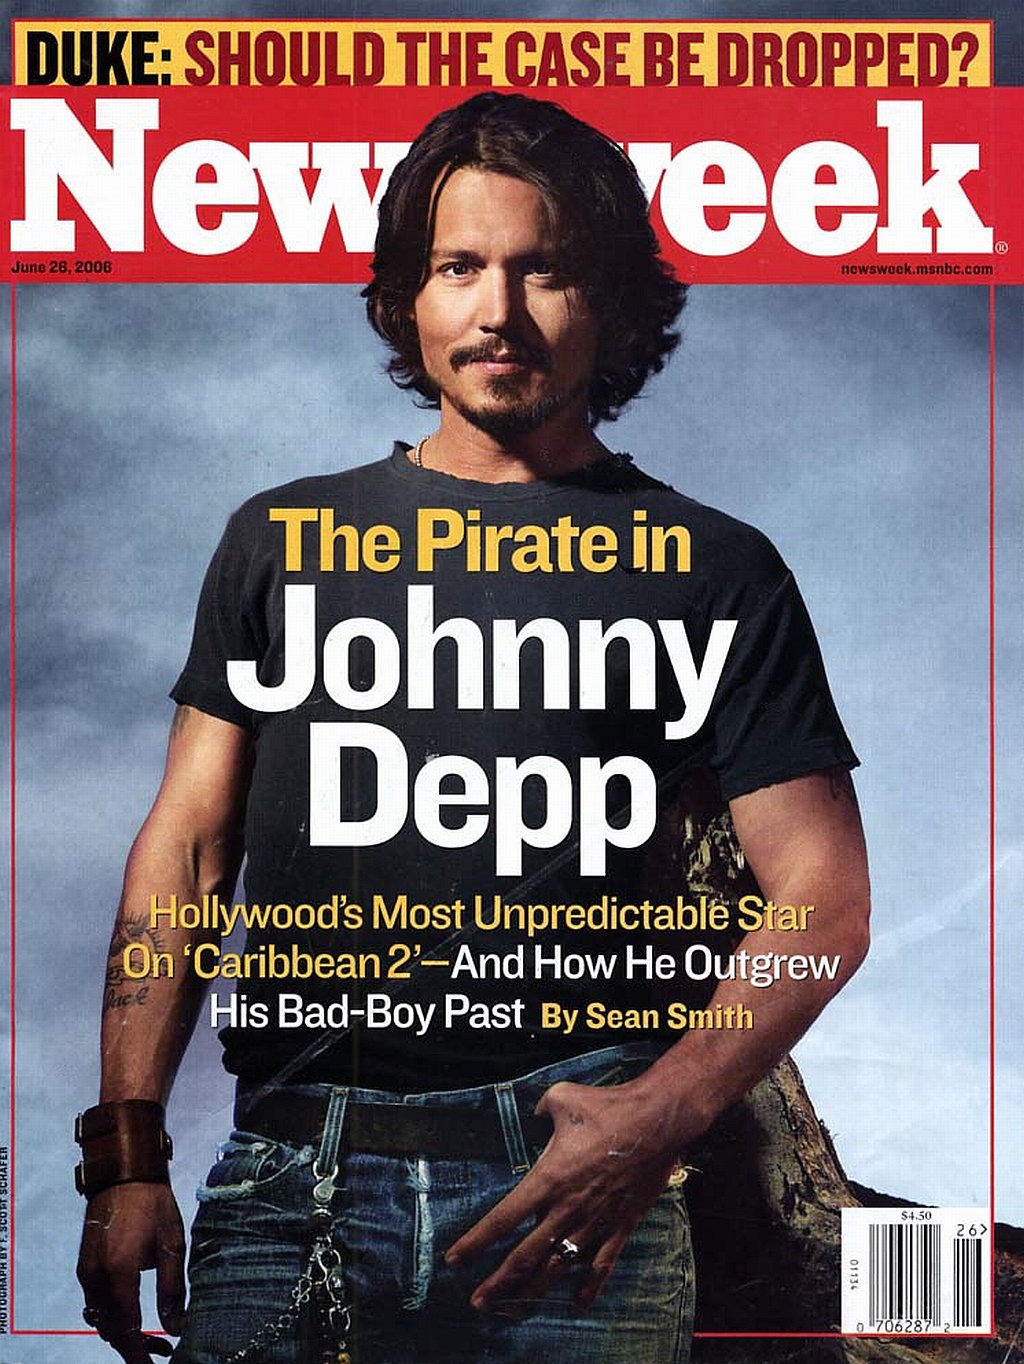 Johnny Depp photo 163 of 832 pics, wallpaper - photo #62367 - ThePlace2